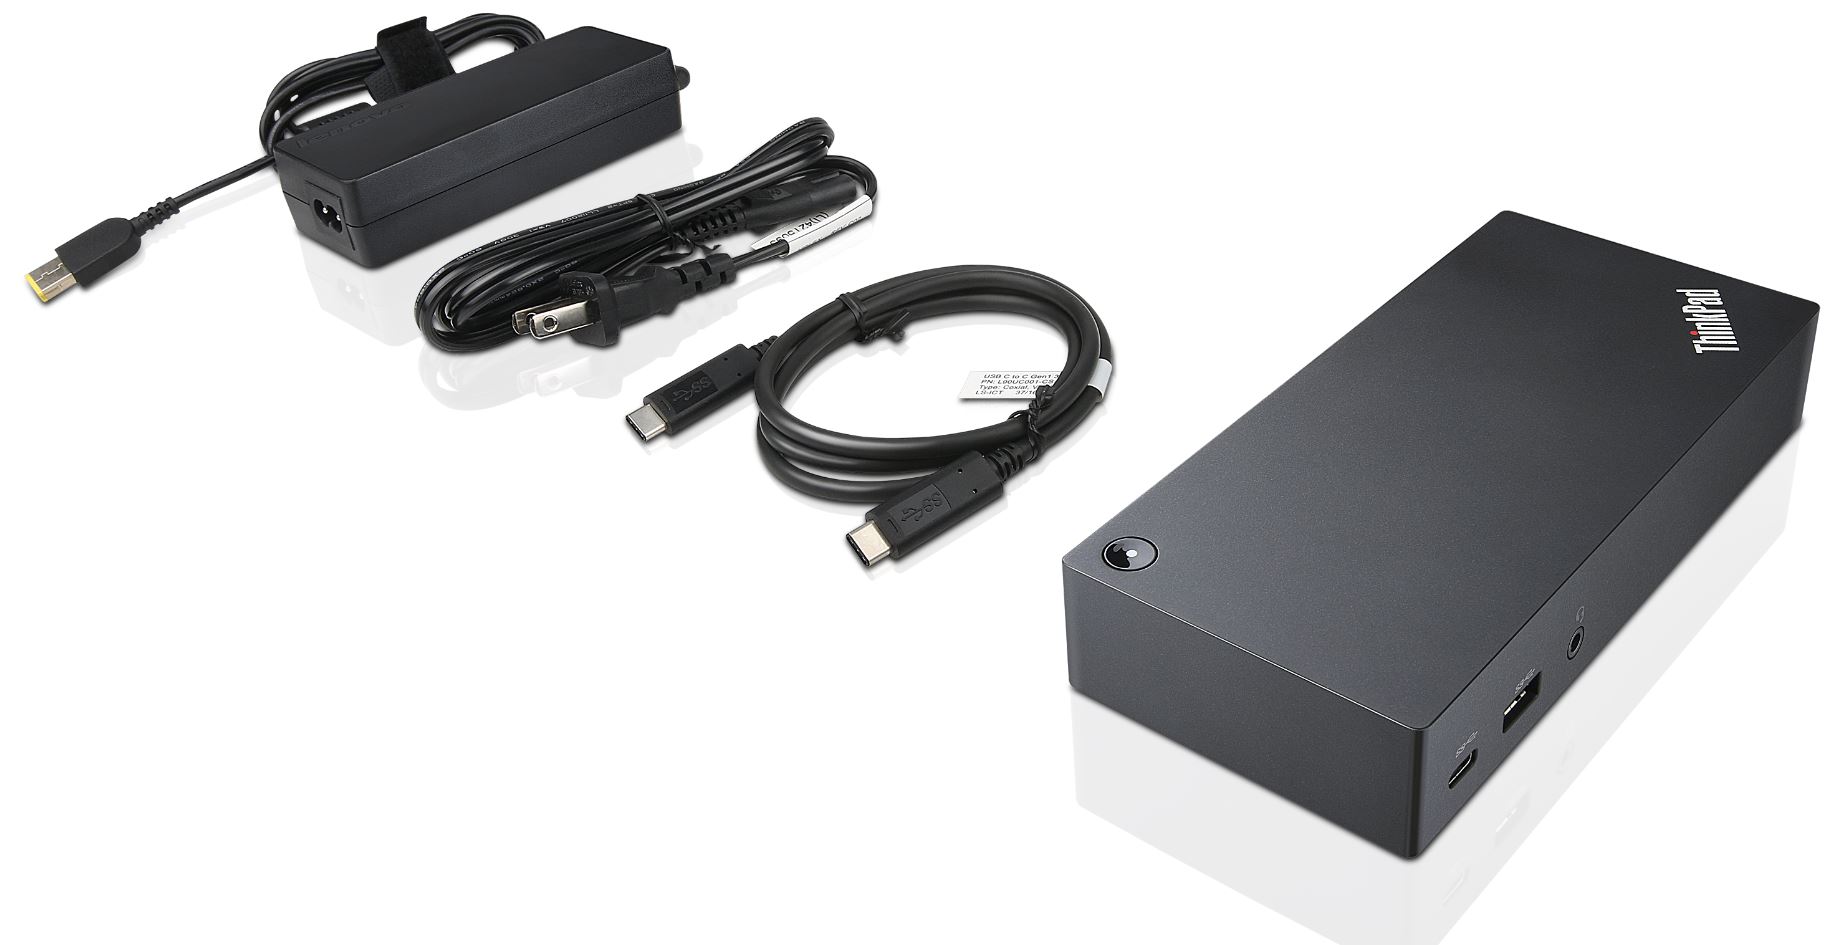 violet Børnecenter Sindsro ThinkPad USB-C Dock - Overview and Service Parts - Lenovo Support US